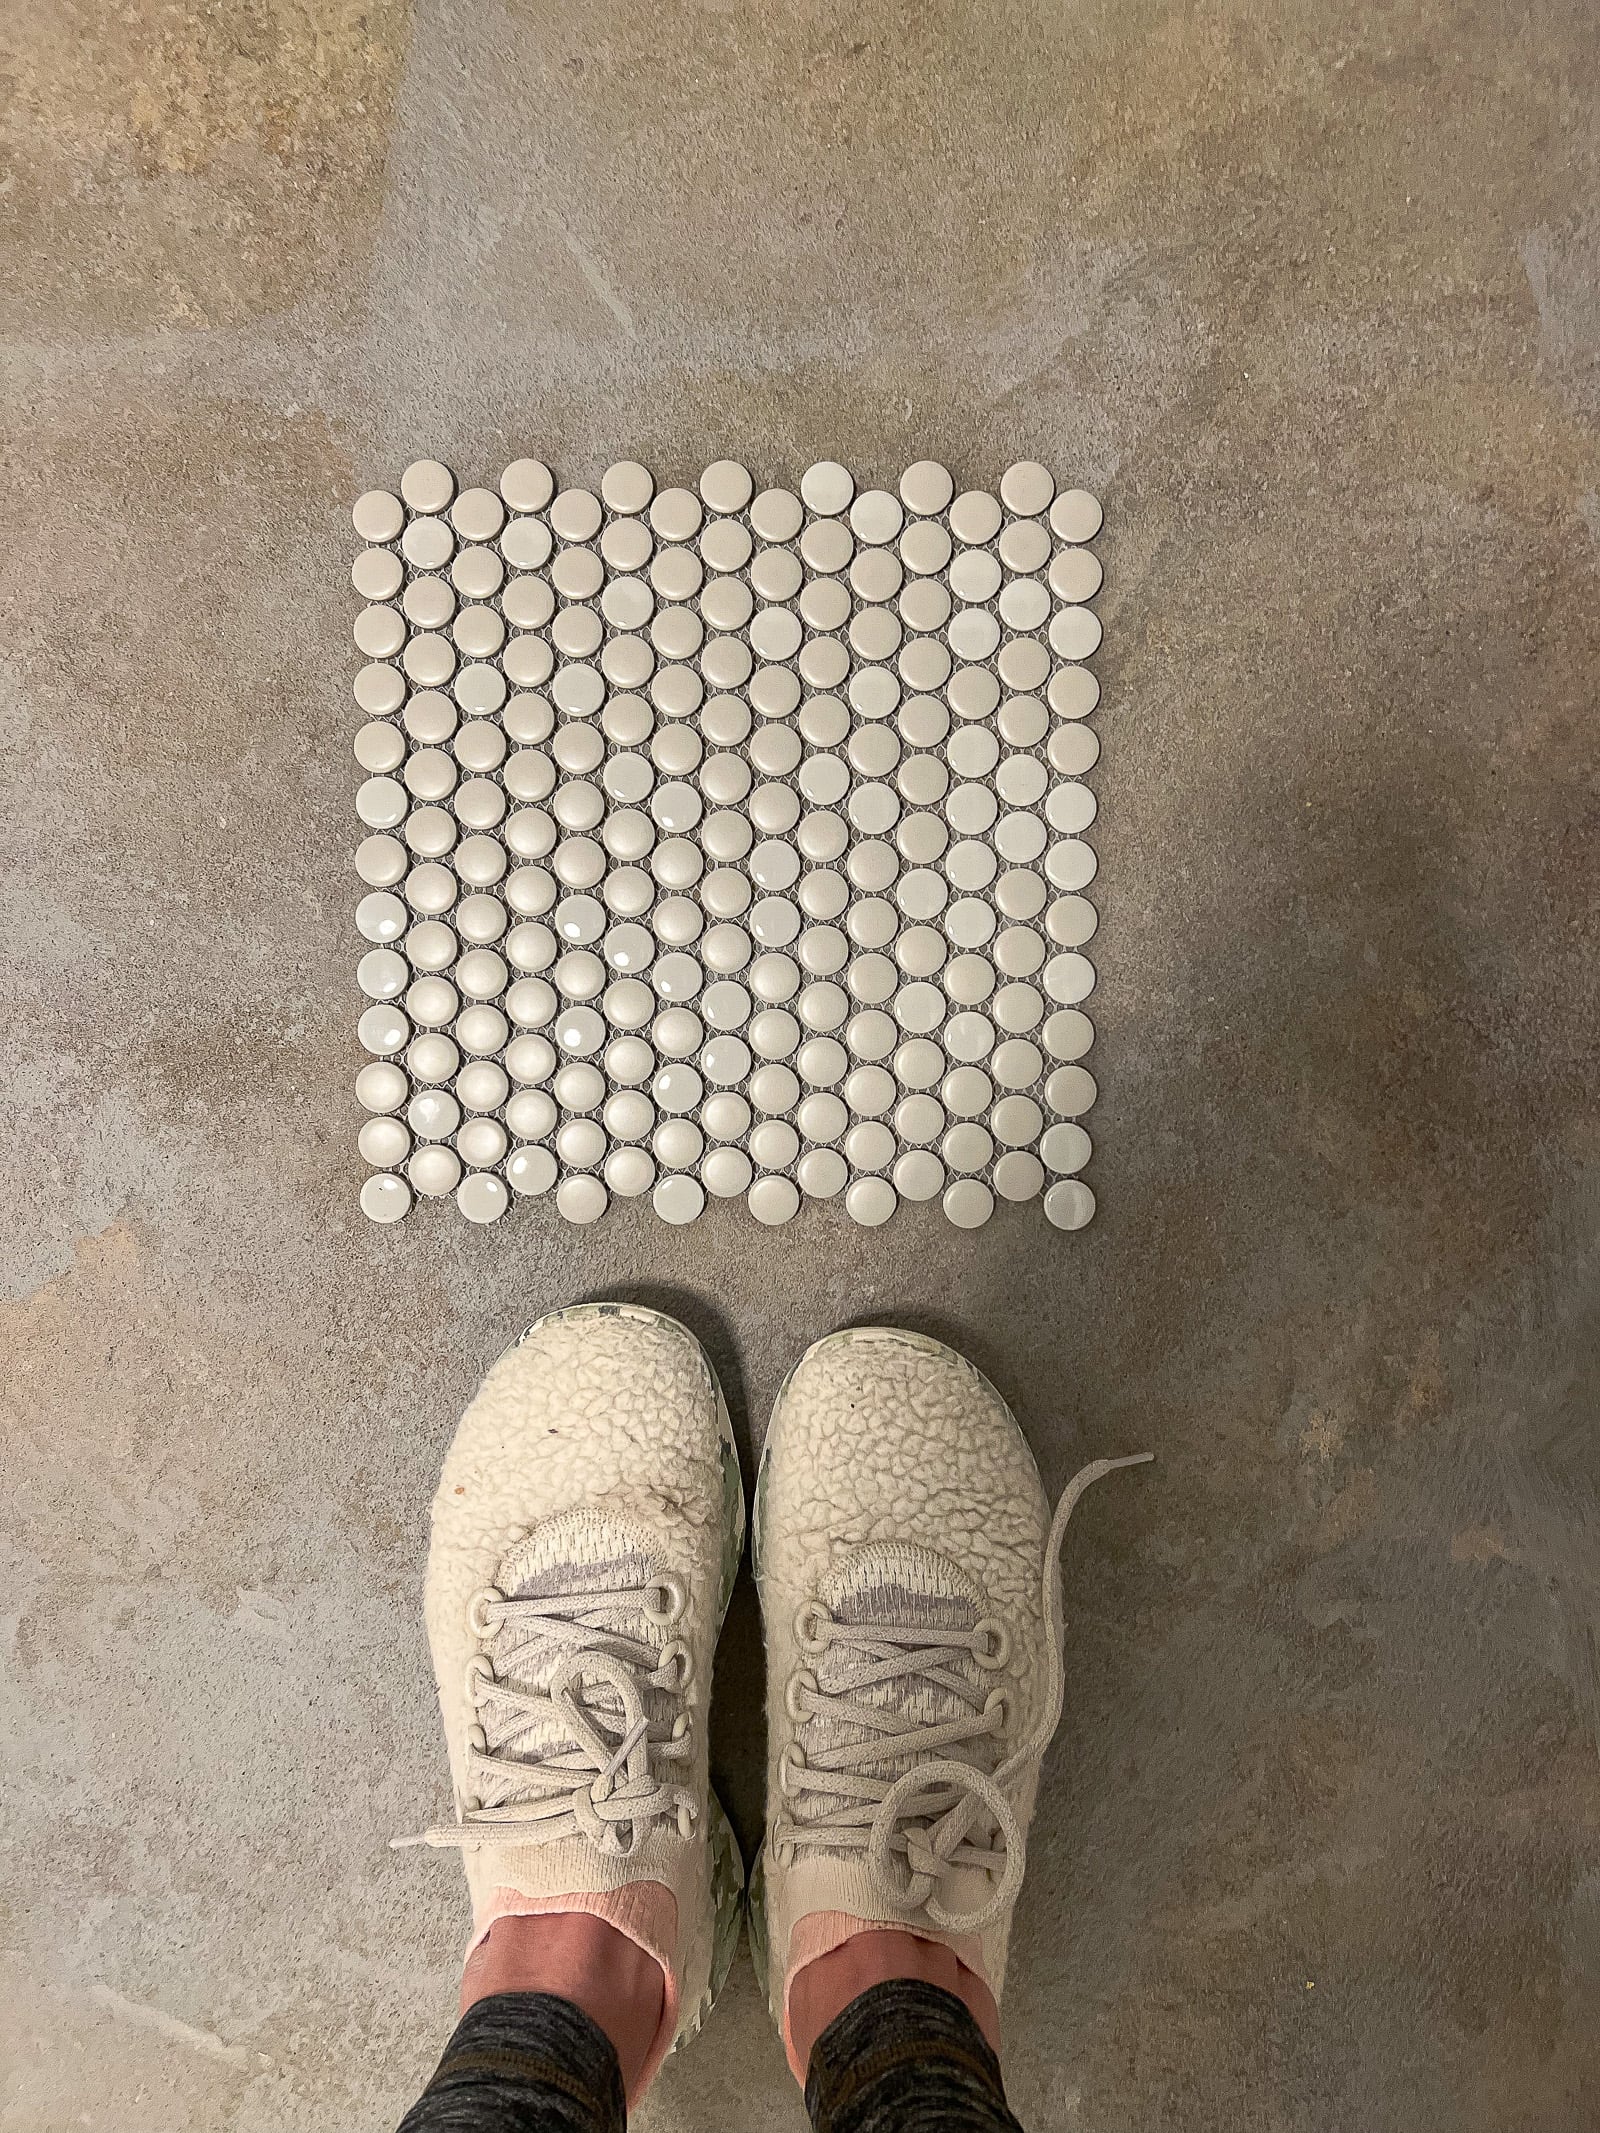 choosing penny tile for our basement bathroom floor 